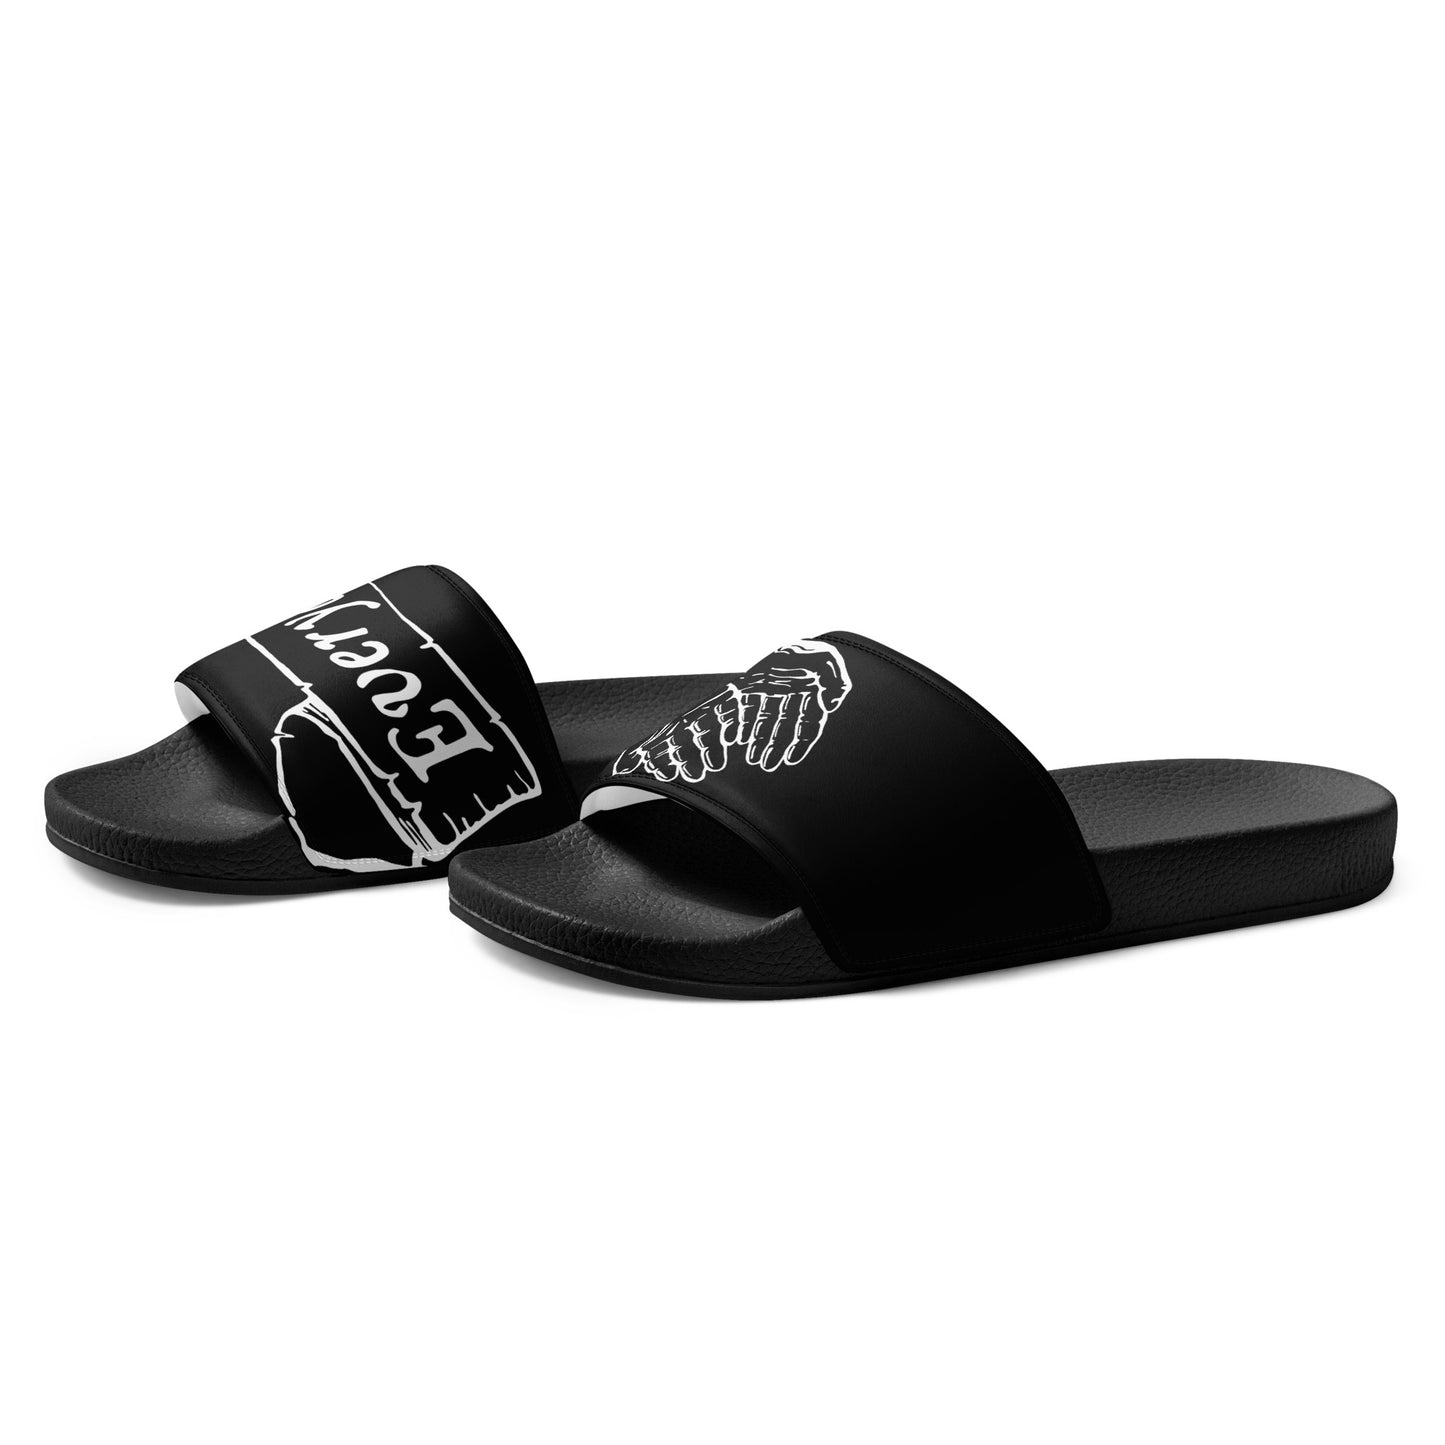 Men’s Sandals: Pray Everyday Slides